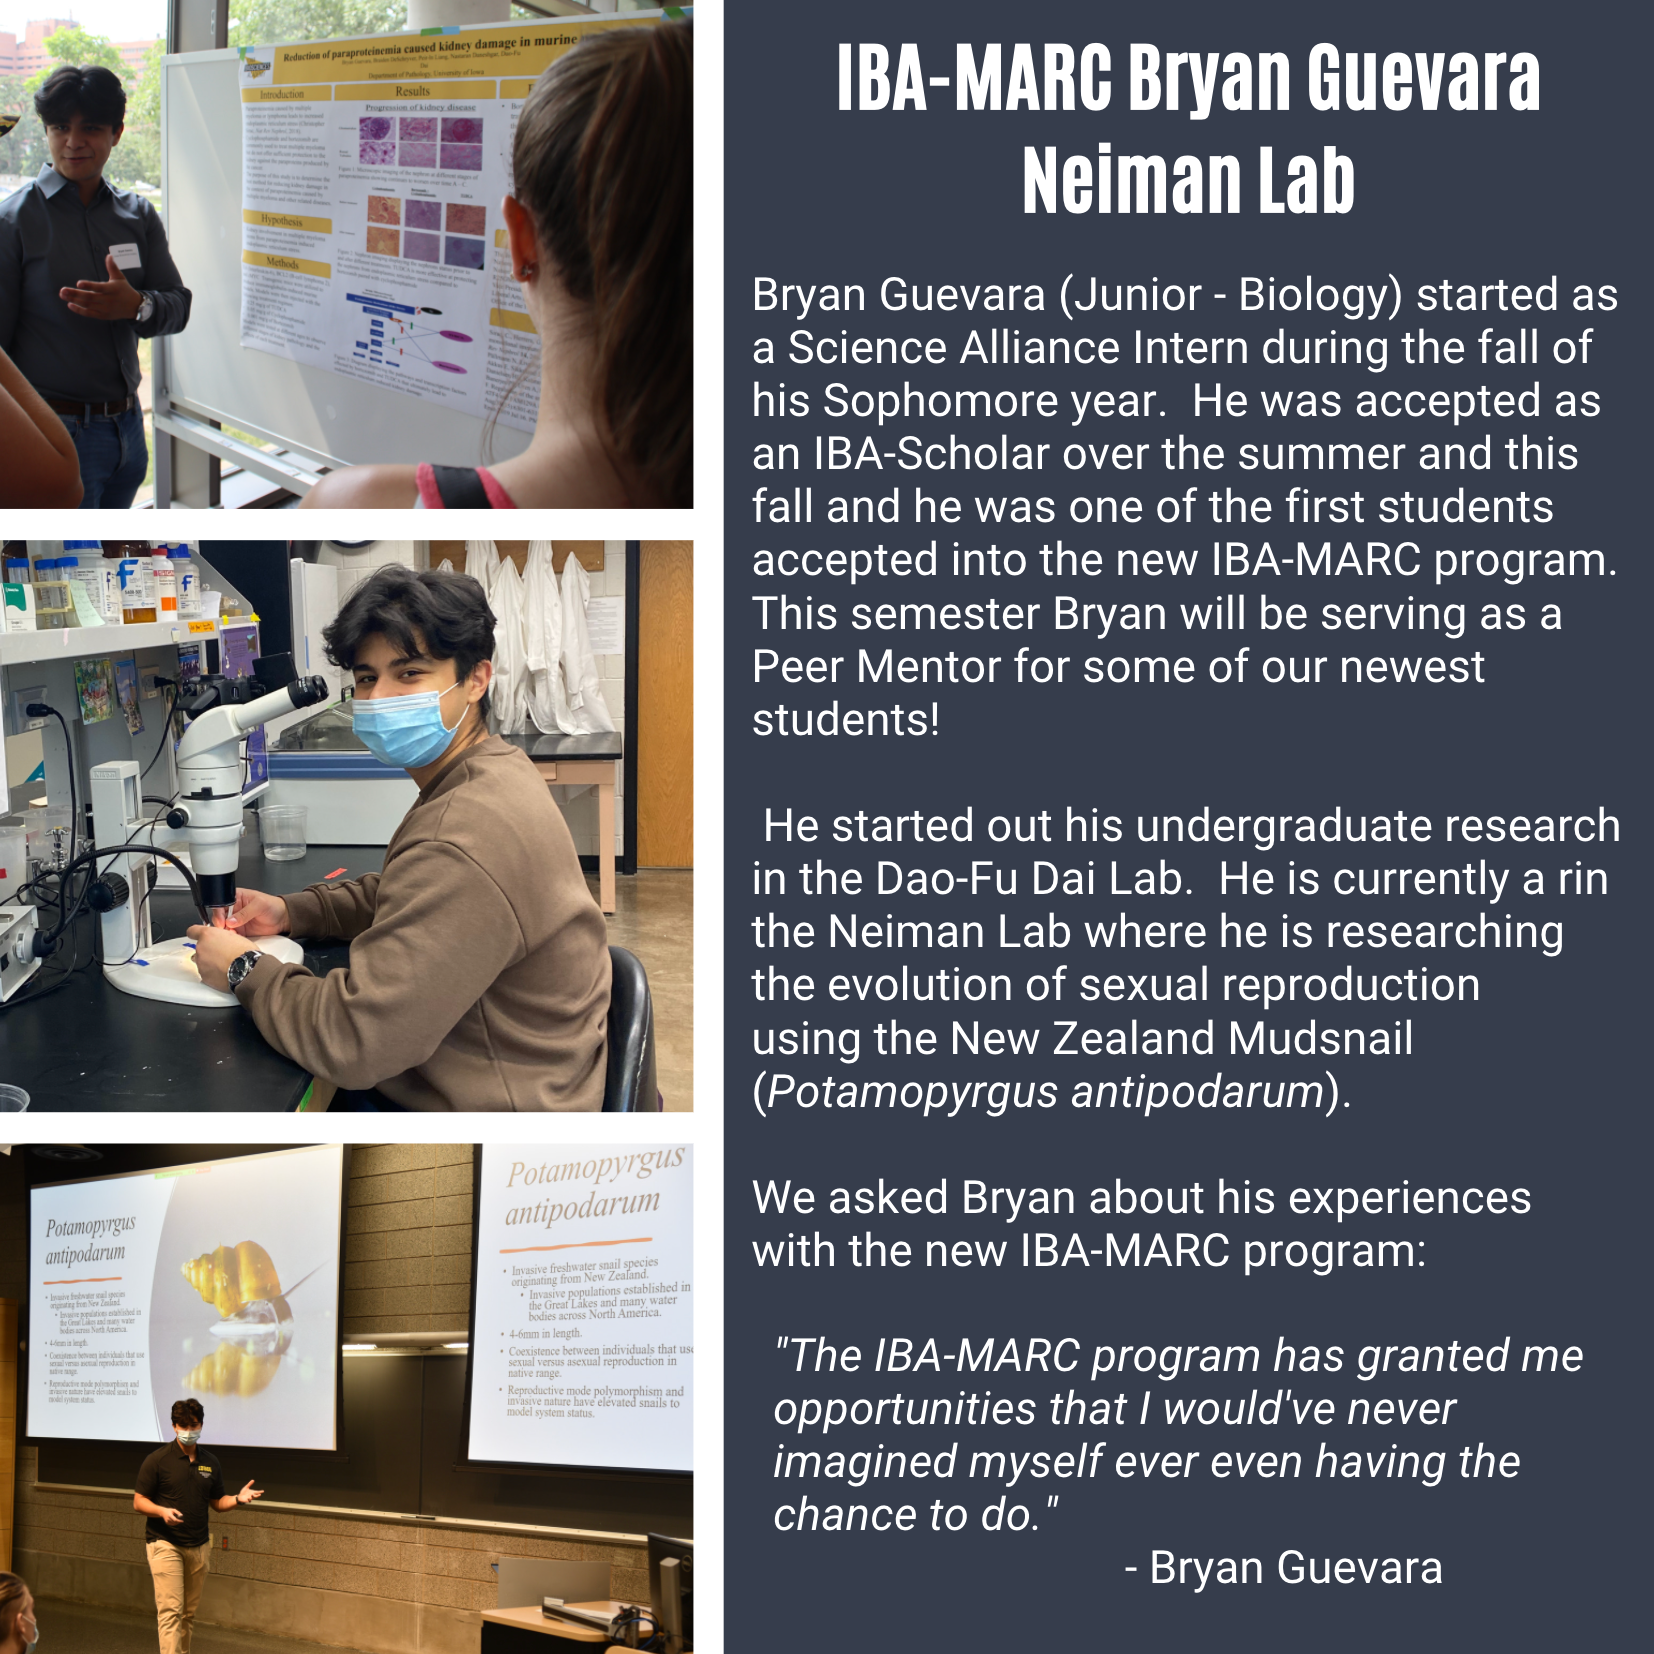 Bryan Guevara's undergraduate research in the Neiman Lab.